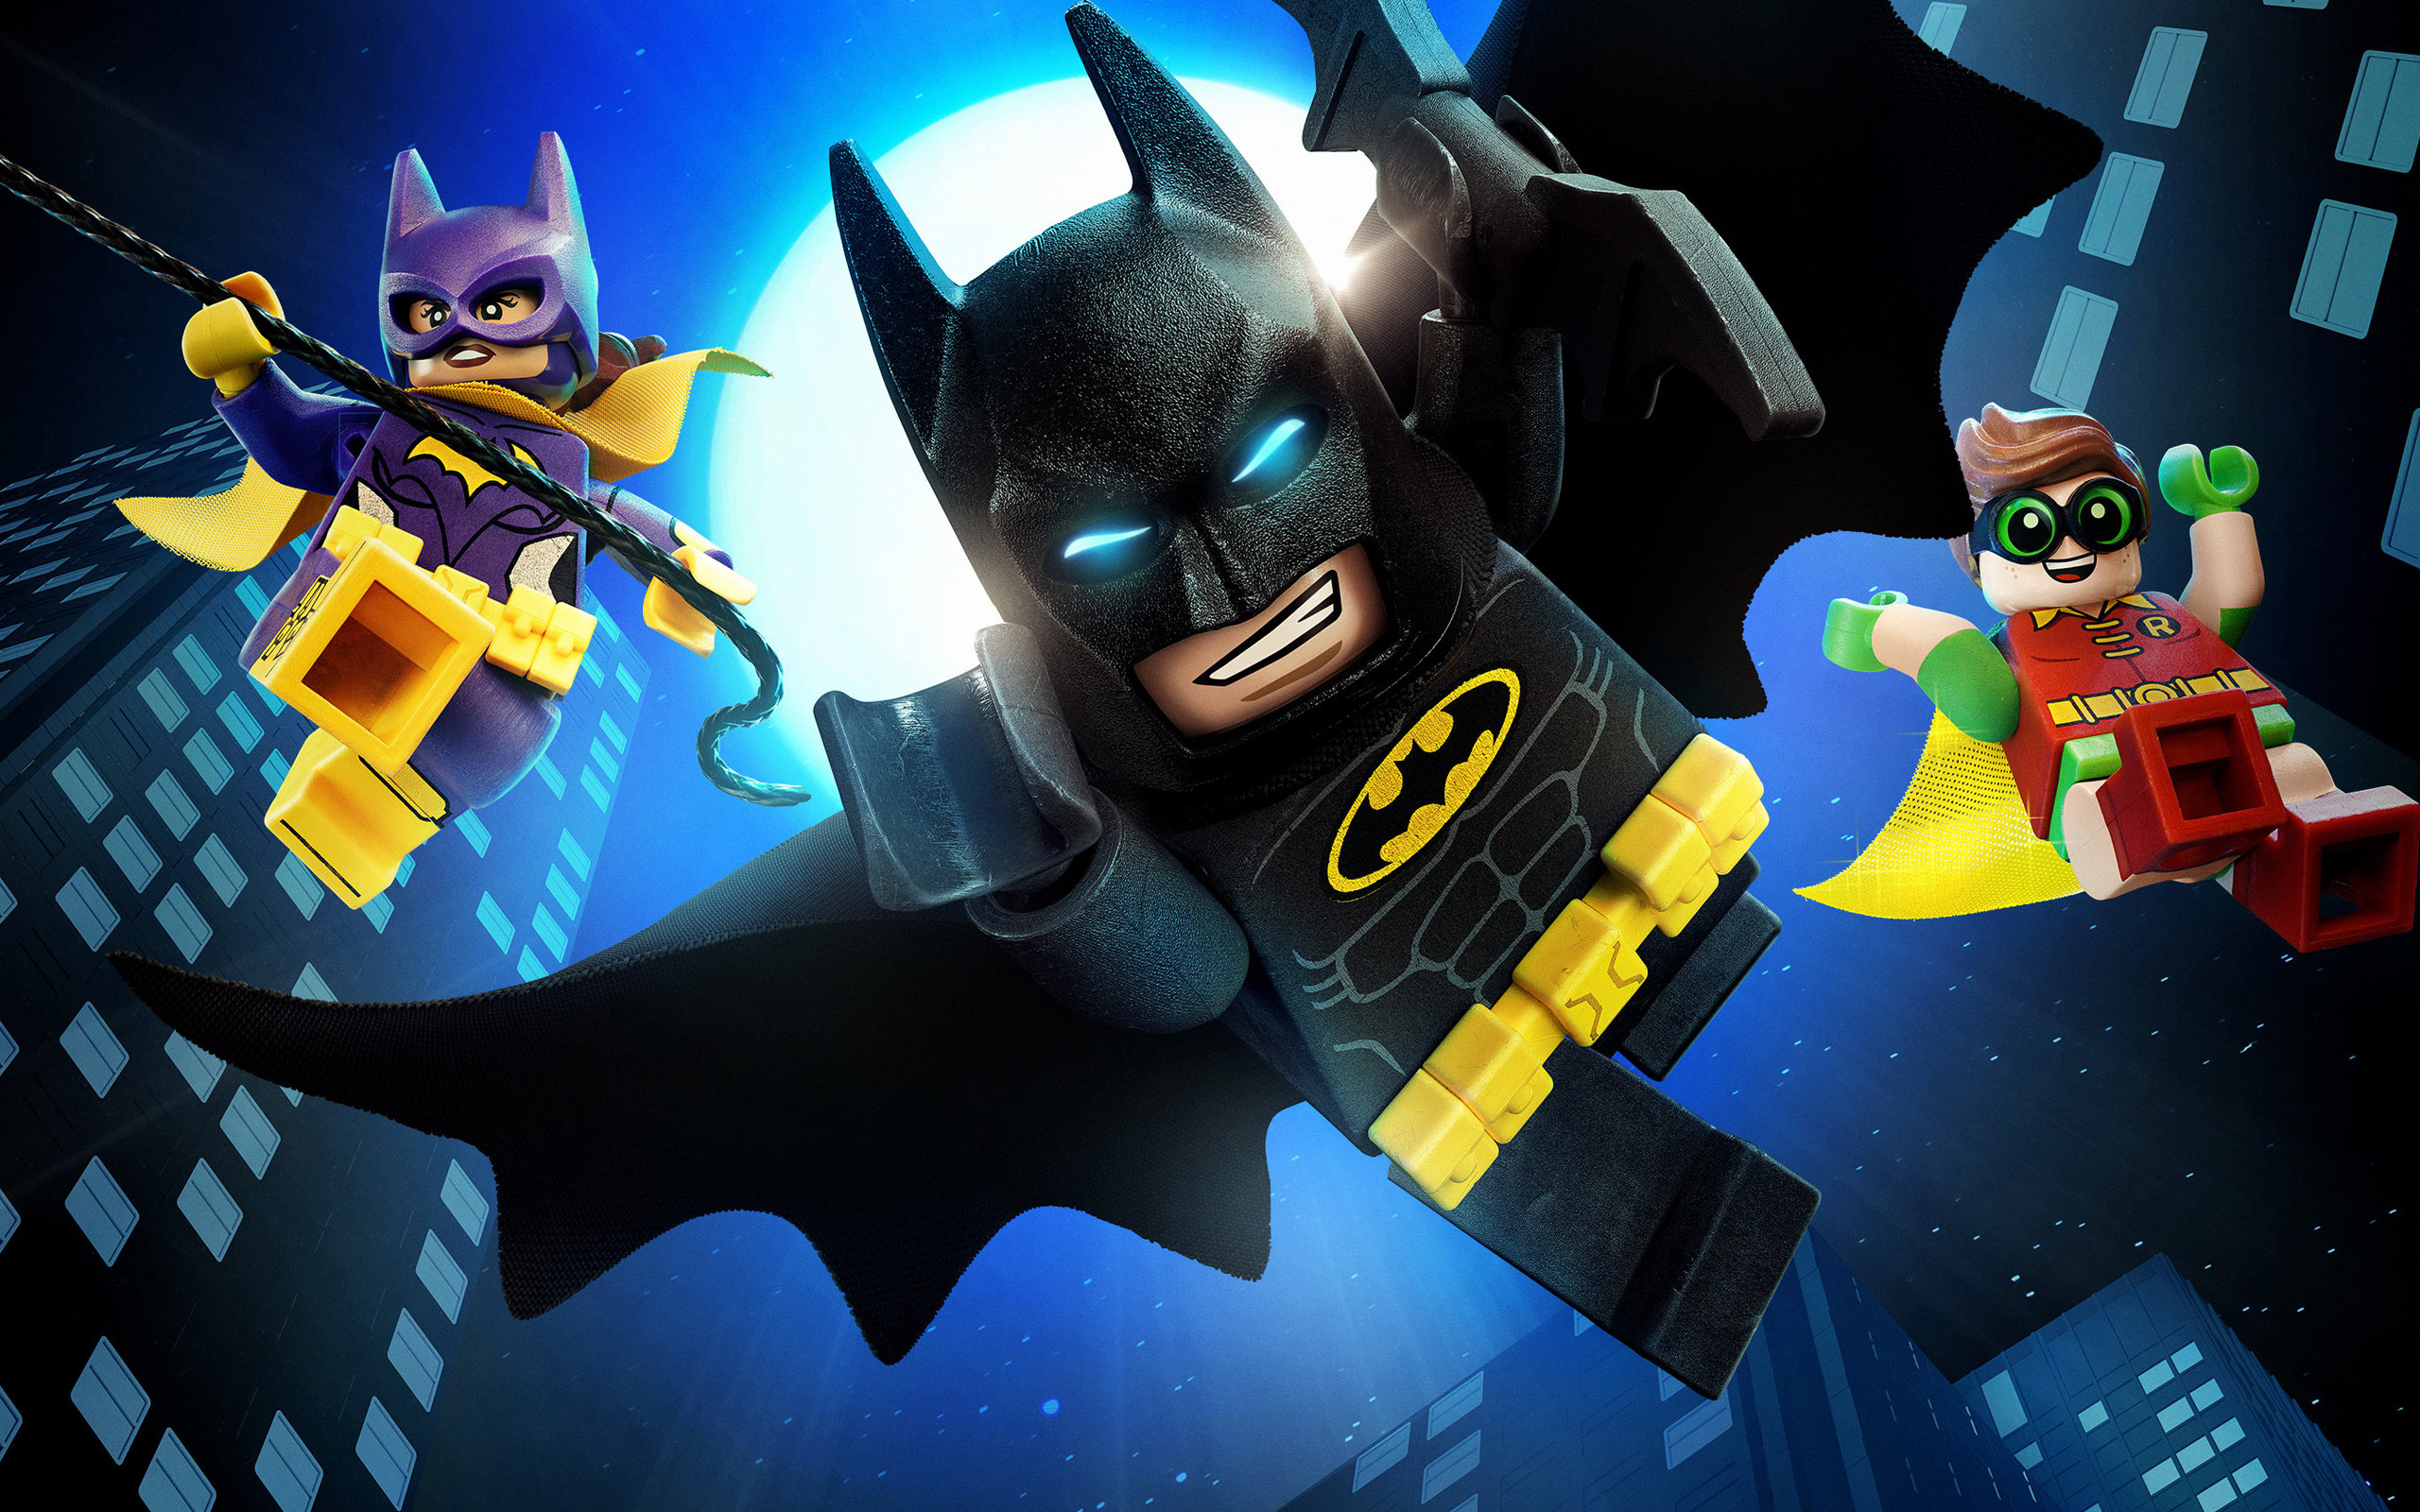 Lego Batman Movie Wallpapers